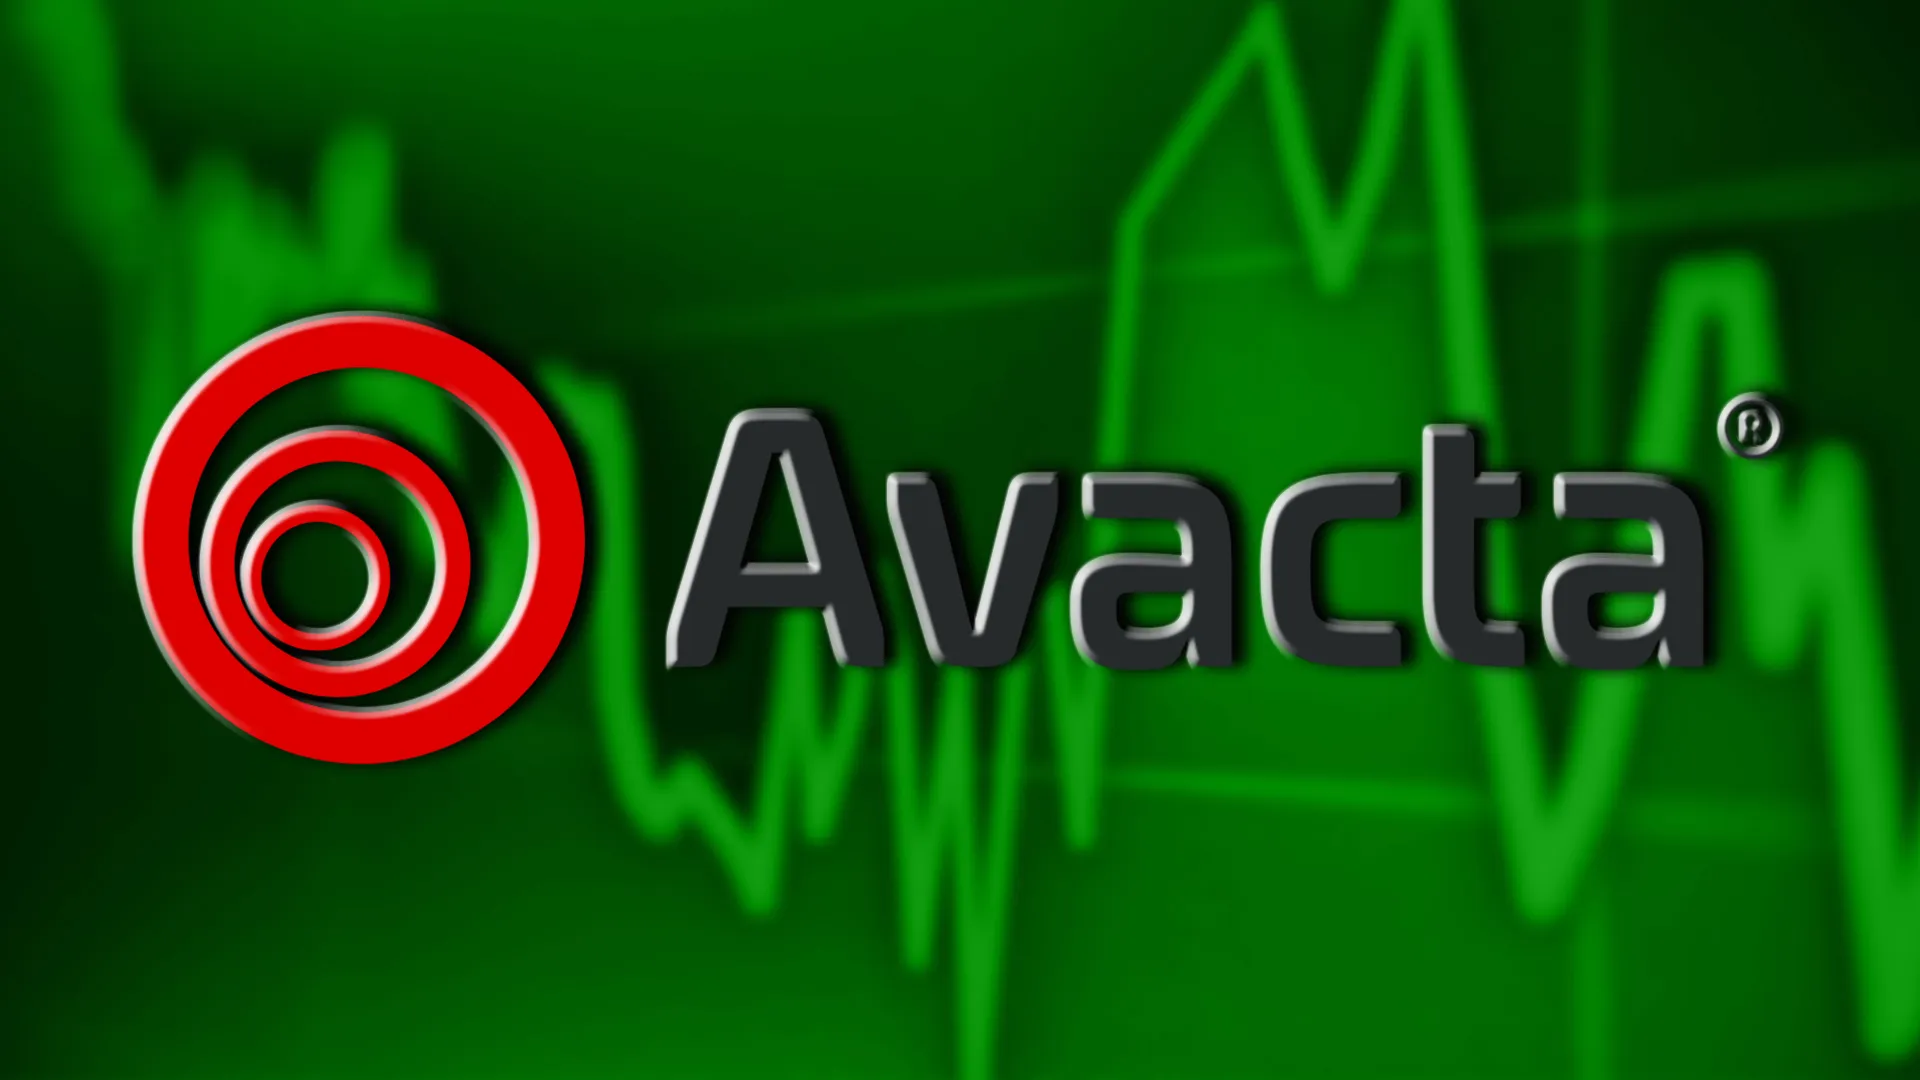 Avacta stock prediction